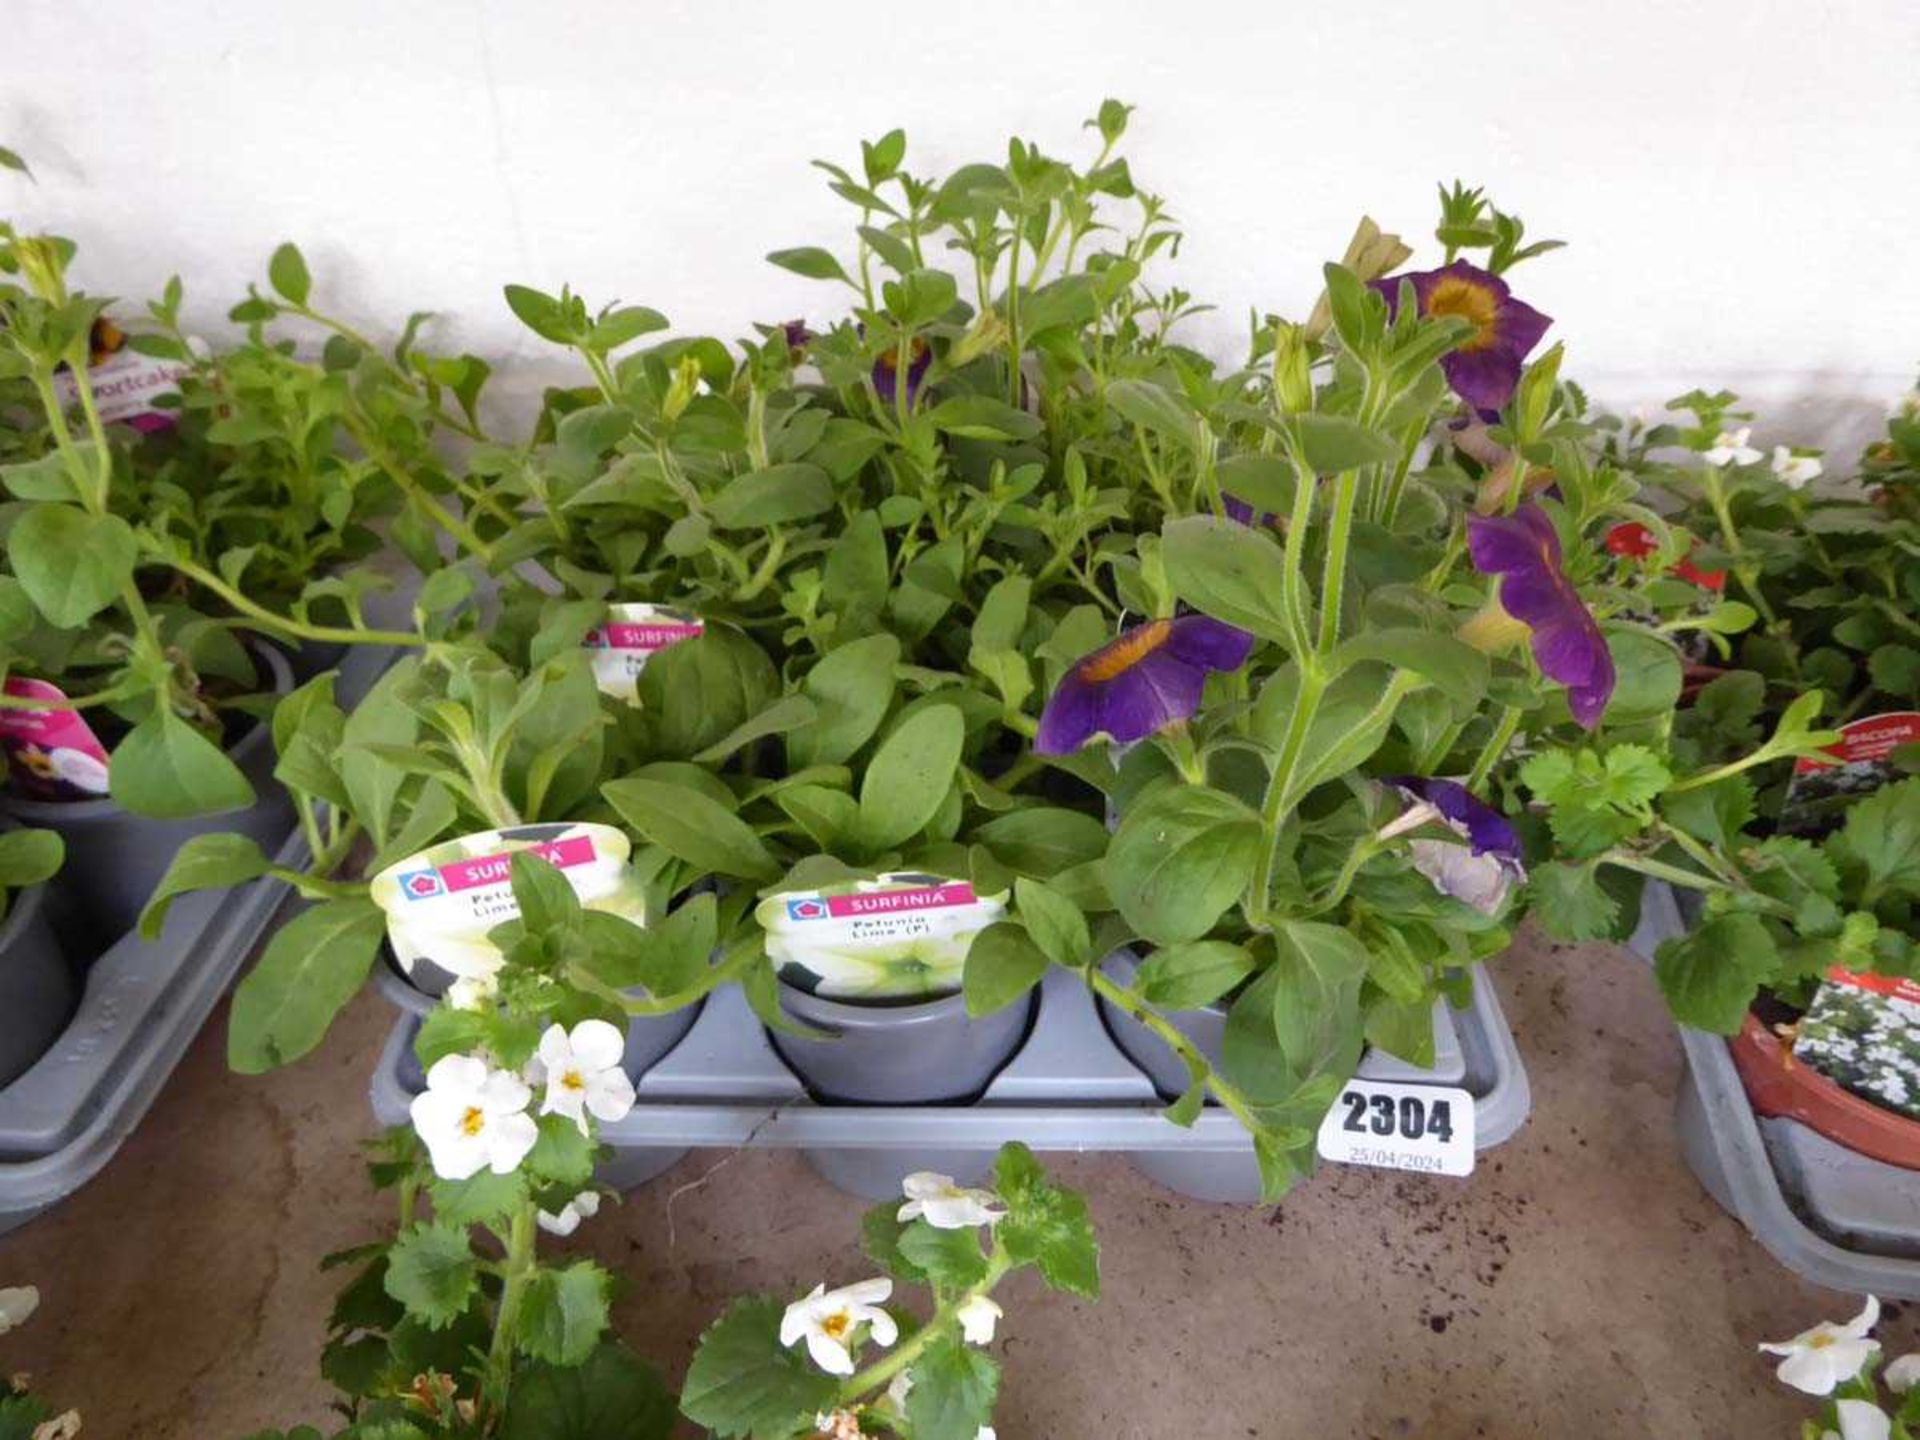 Tray containing 9 pots of mixed petunia